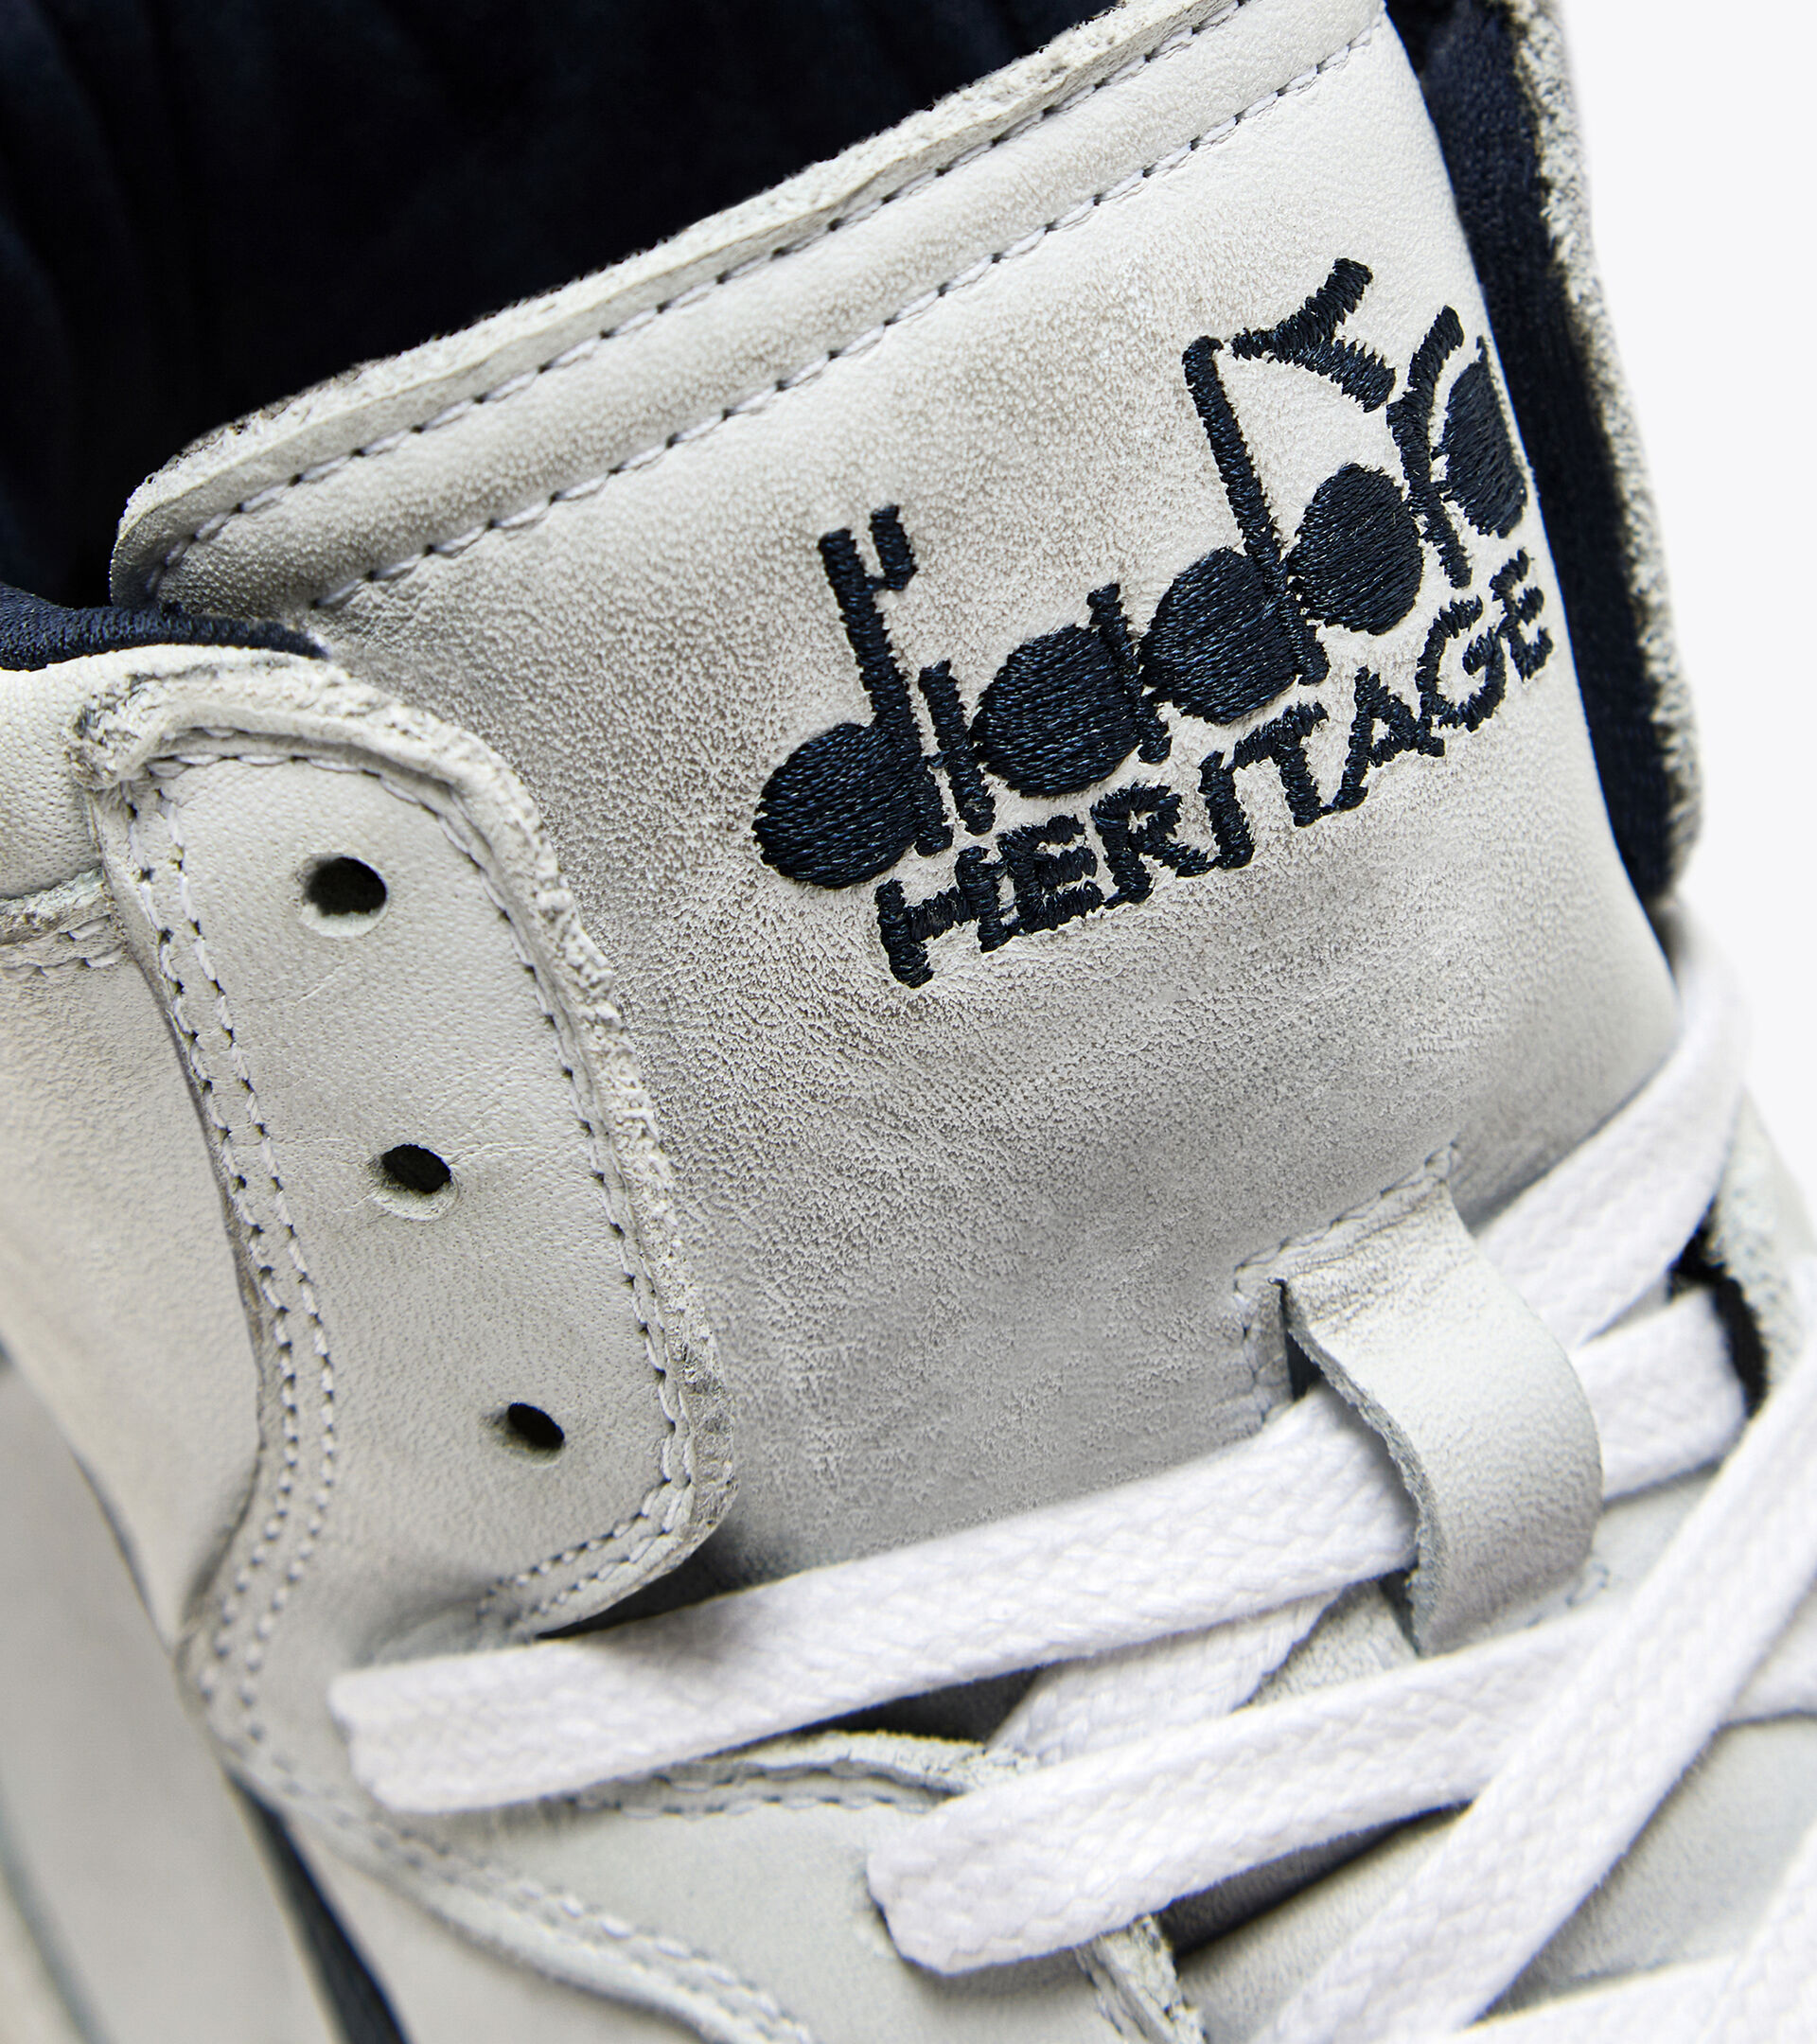 Heritage shoes - Unisex MI BASKET USED WHITE/BLUE CORSAIR - Diadora